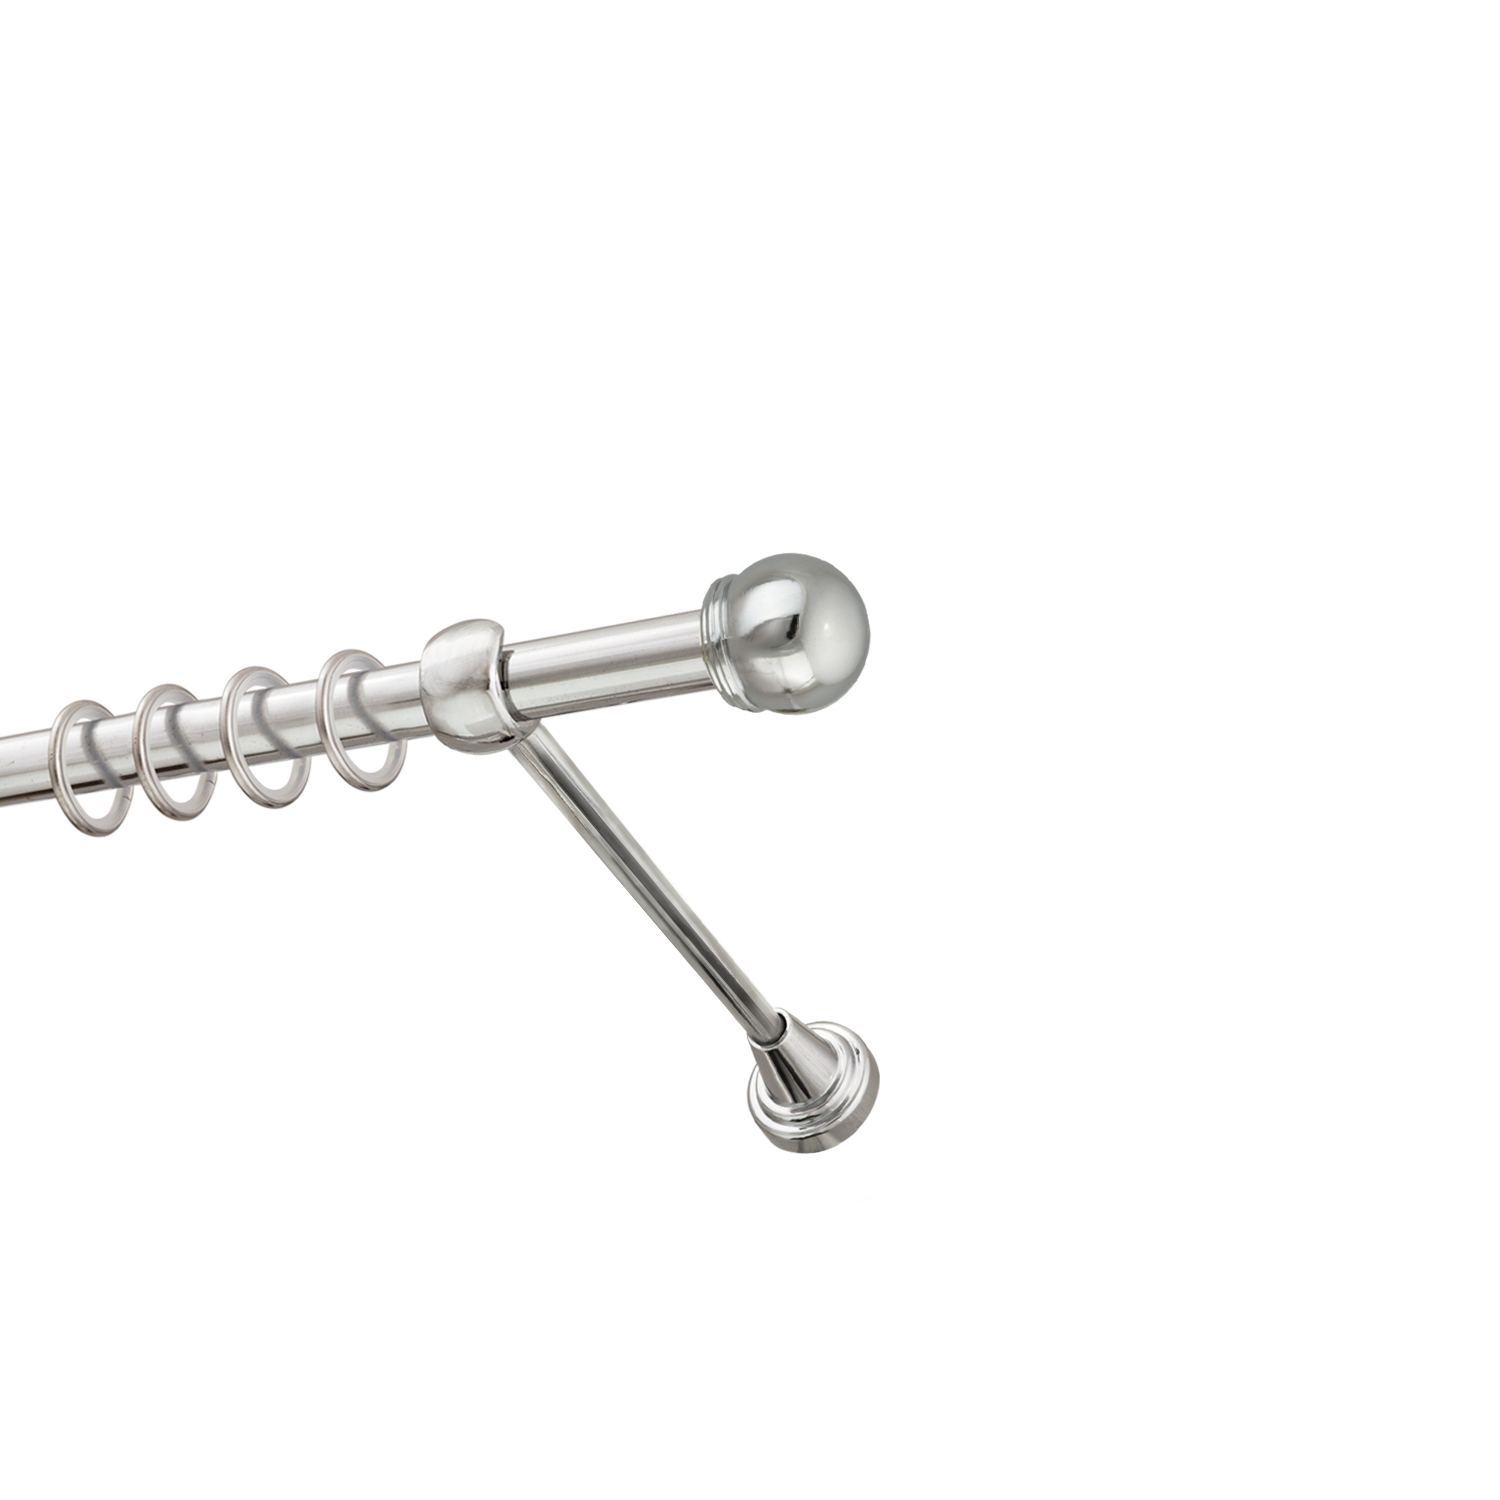 Металлический карниз для штор Вива, однорядный 16 мм, серебро, гладкая штанга, длина 140 см - фото Wikidecor.ru